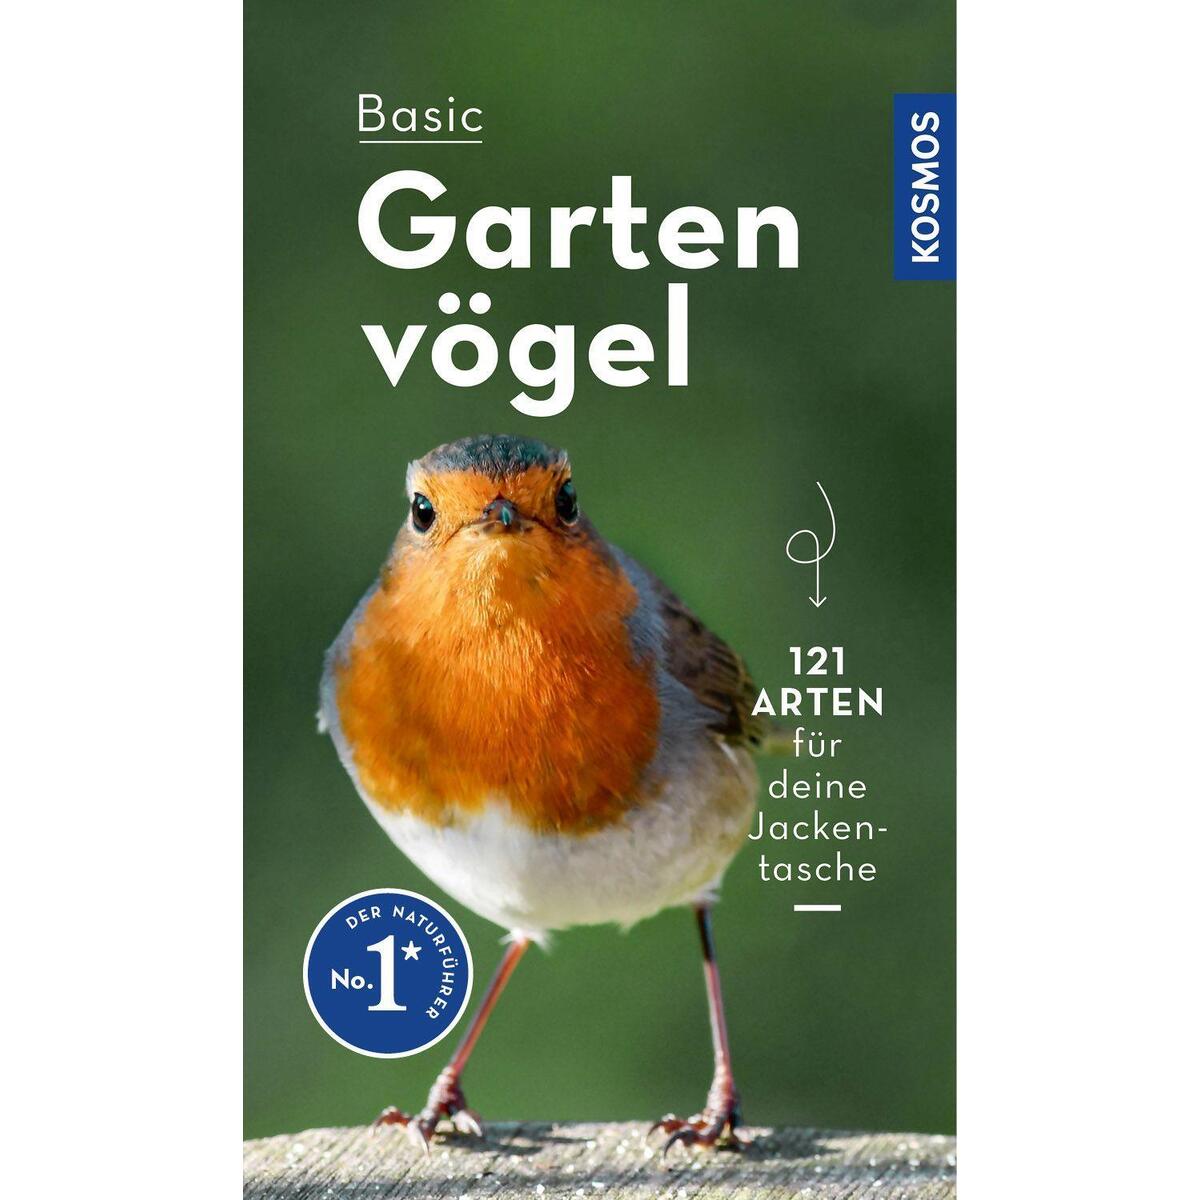 BASIC Gartenvögel von Franckh-Kosmos